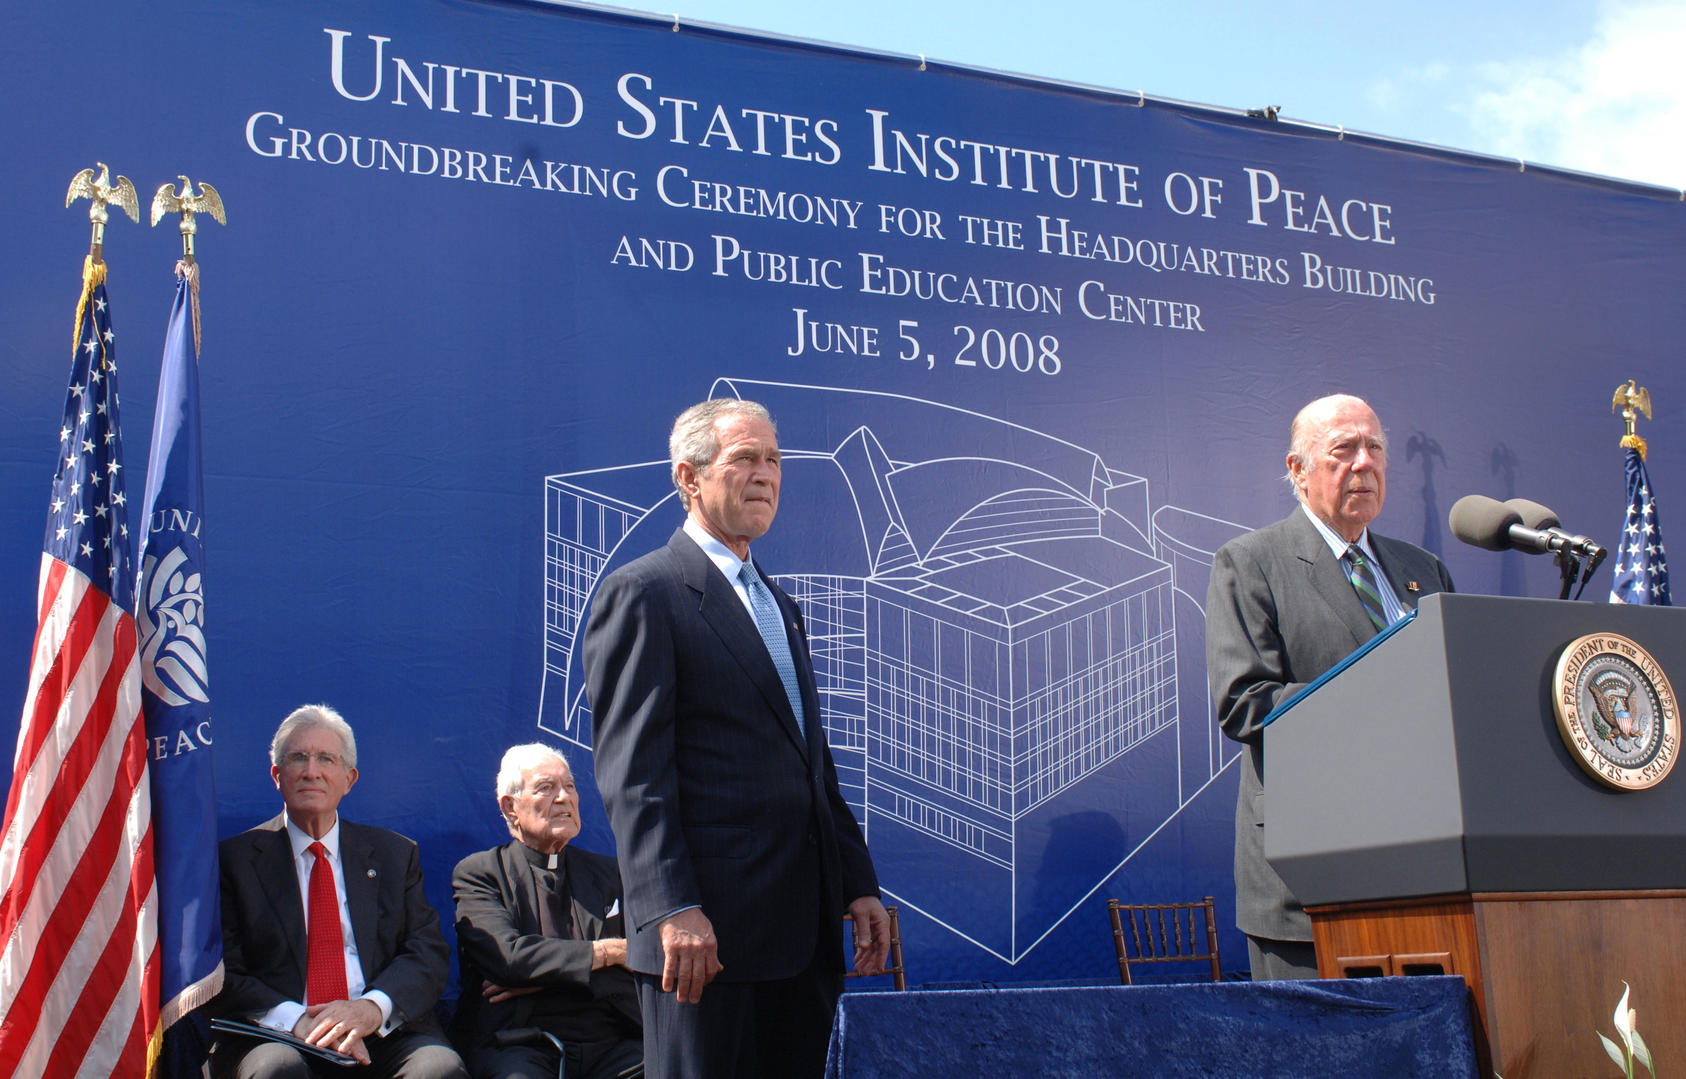 USIP Groundbreaking, George Shultz introduces President George W. Bush